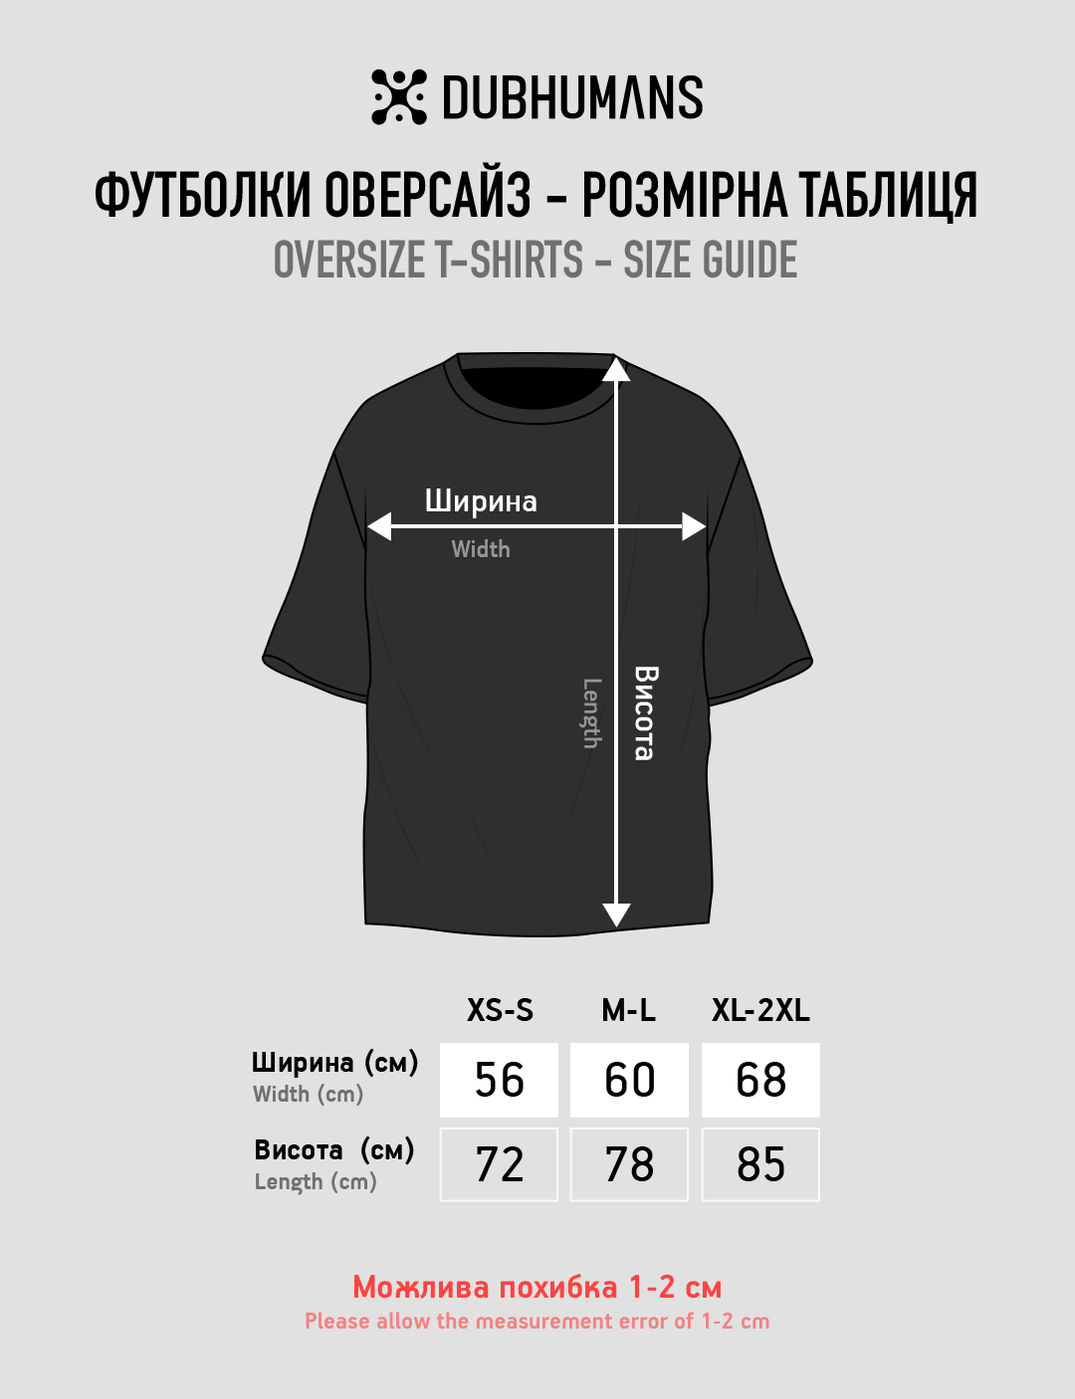 Men's T-shirt Oversize “Zero Tolerance”, Olive, XS-S